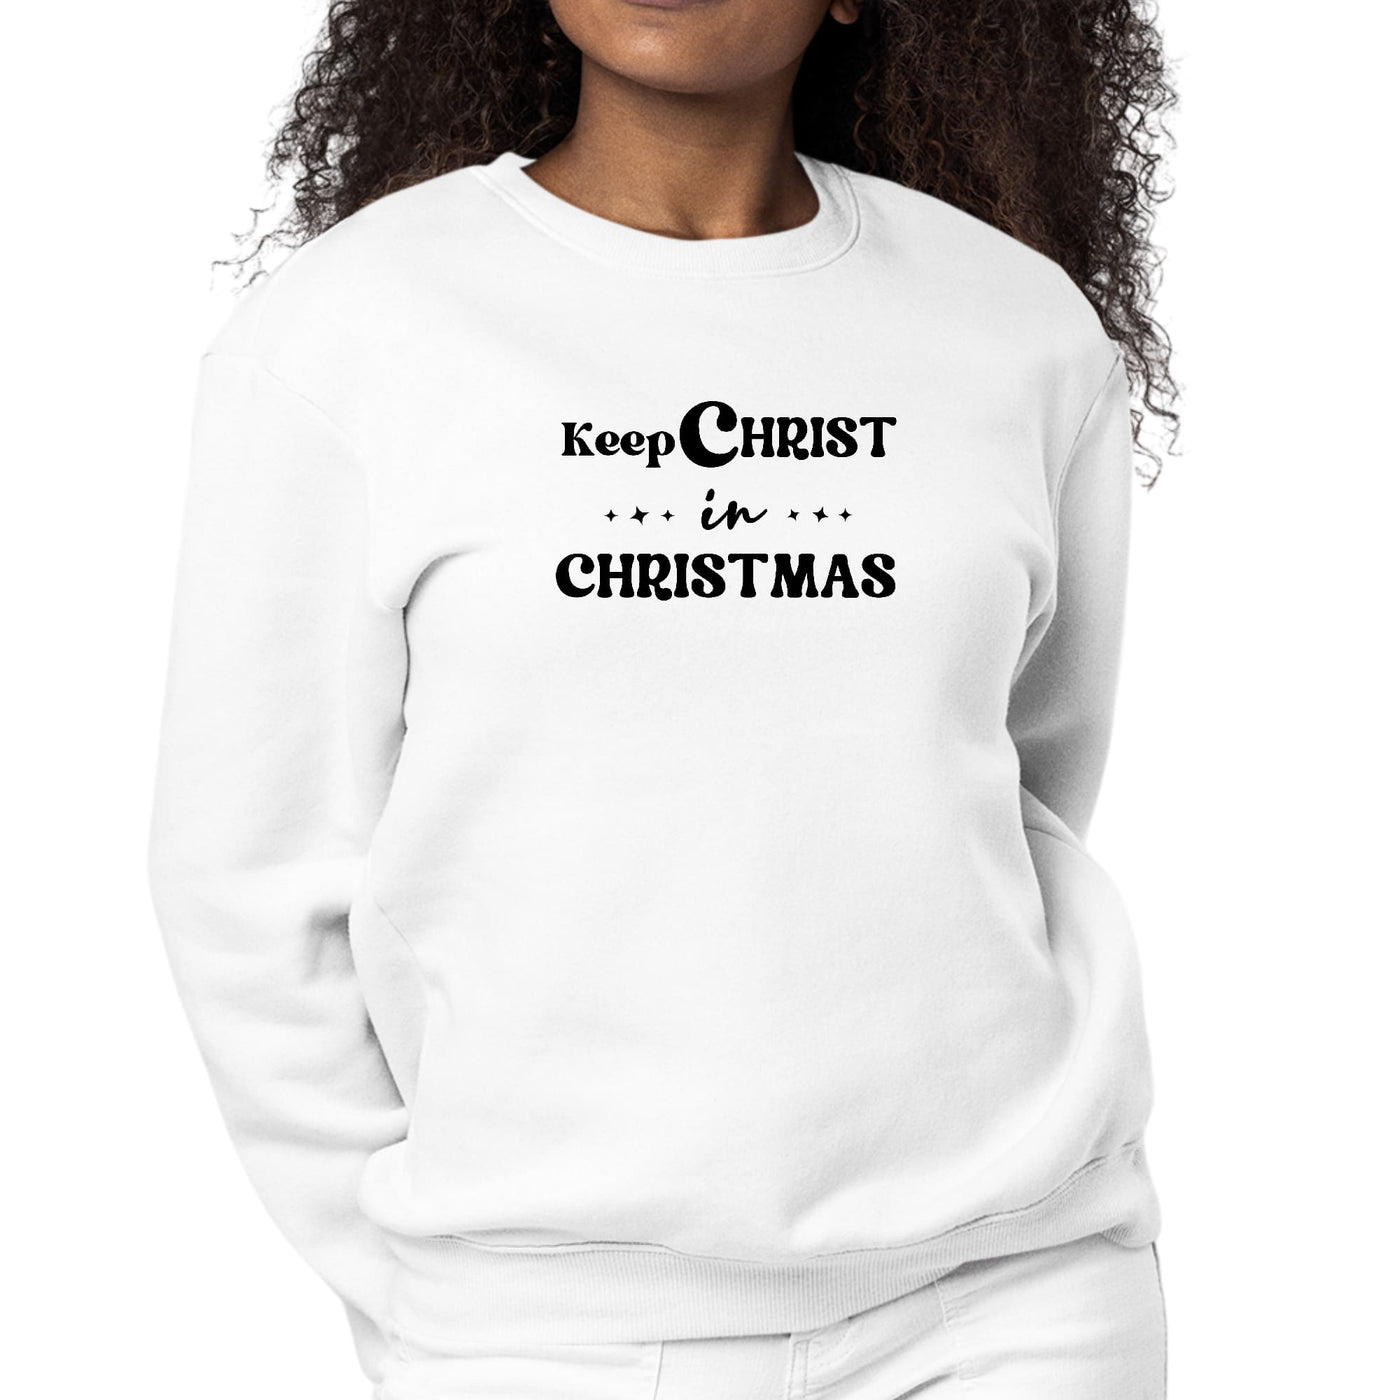 Womens Long Sleeve Graphic Sweatshirt Keep Christ In Christmas, - Womens